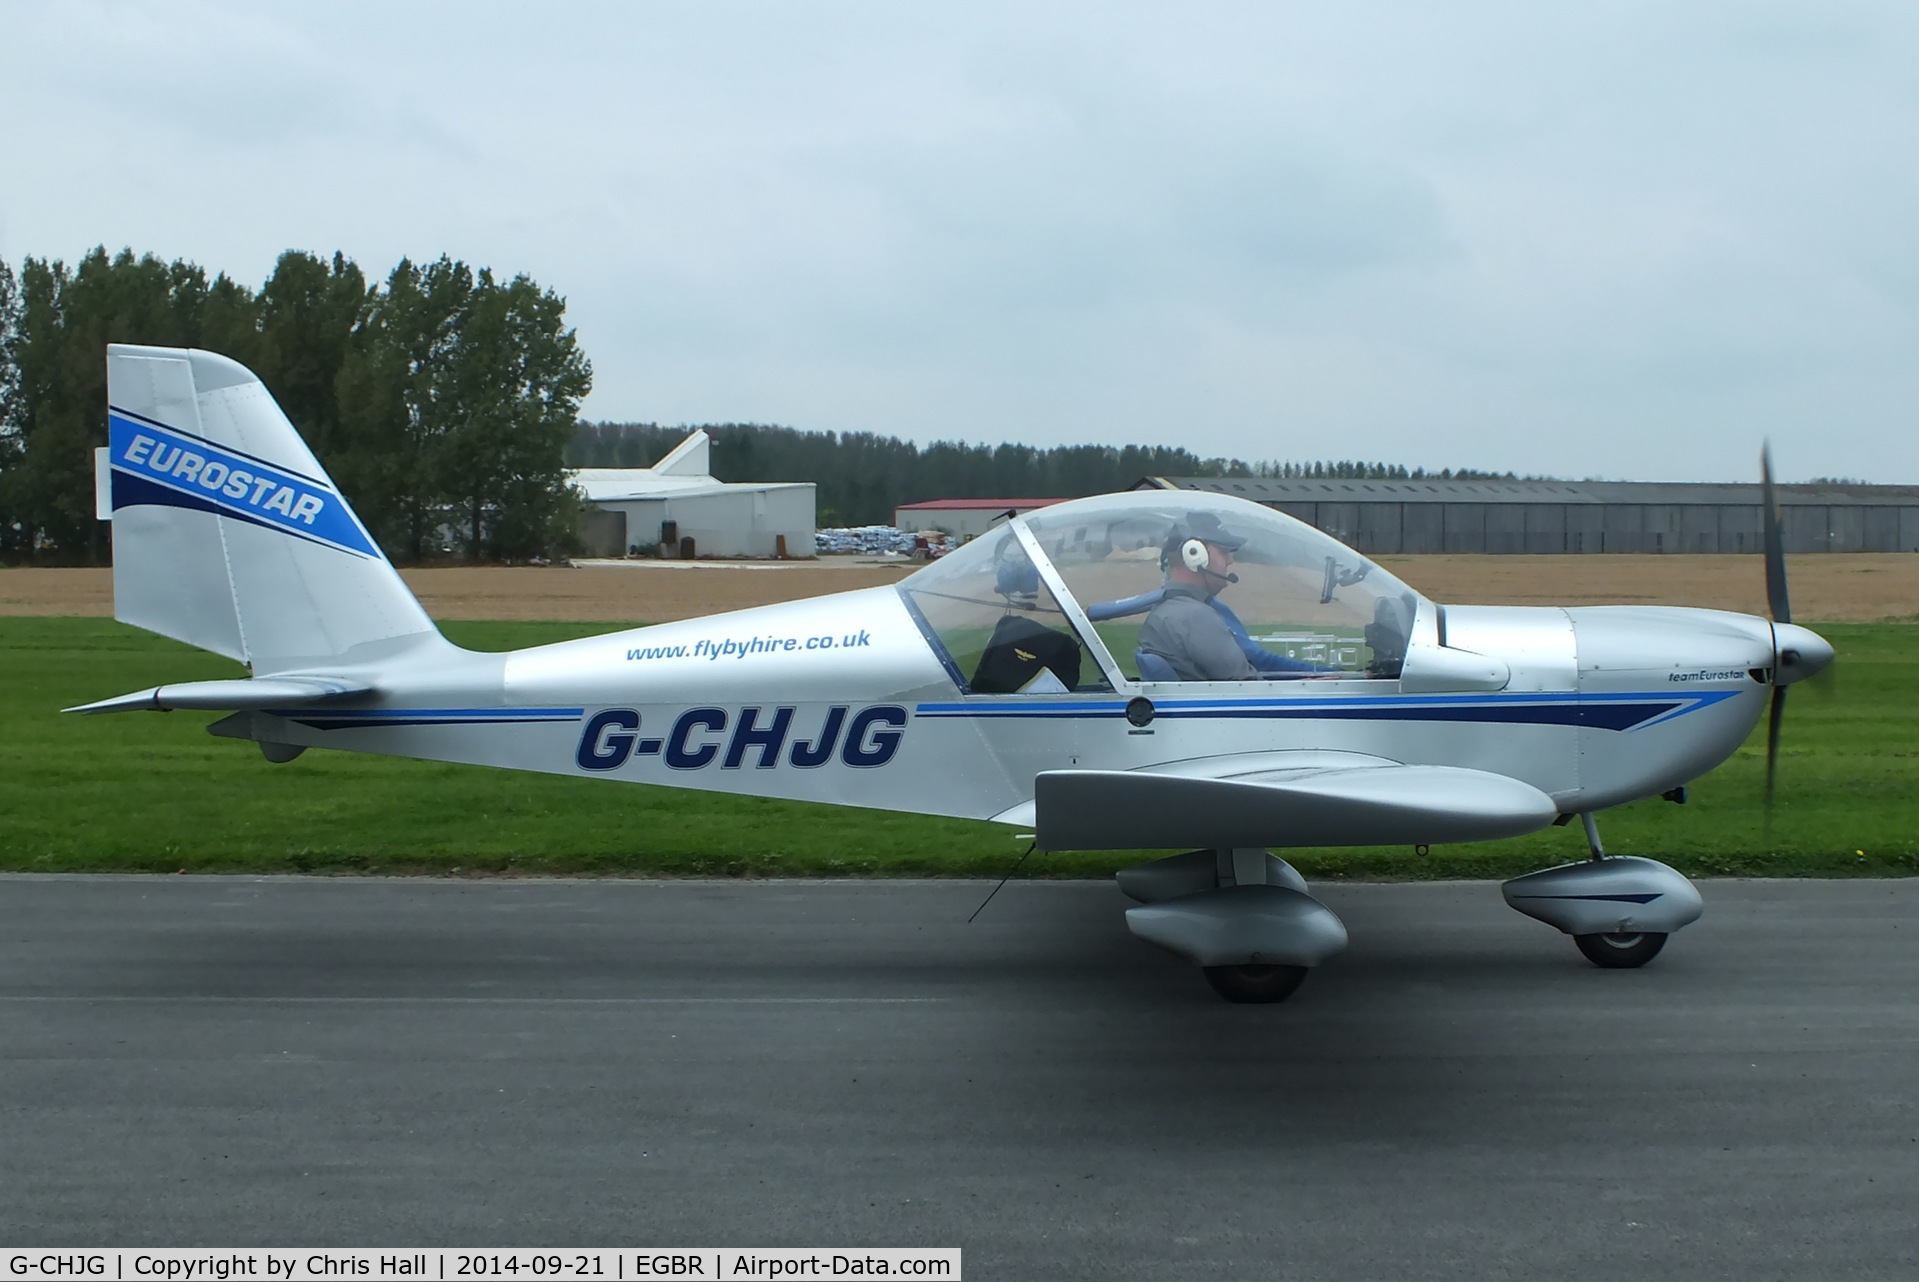 G-CHJG, 2012 Cosmik EV-97 TeamEurostar UK C/N 3938, at Breighton's Heli Fly-in, 2014